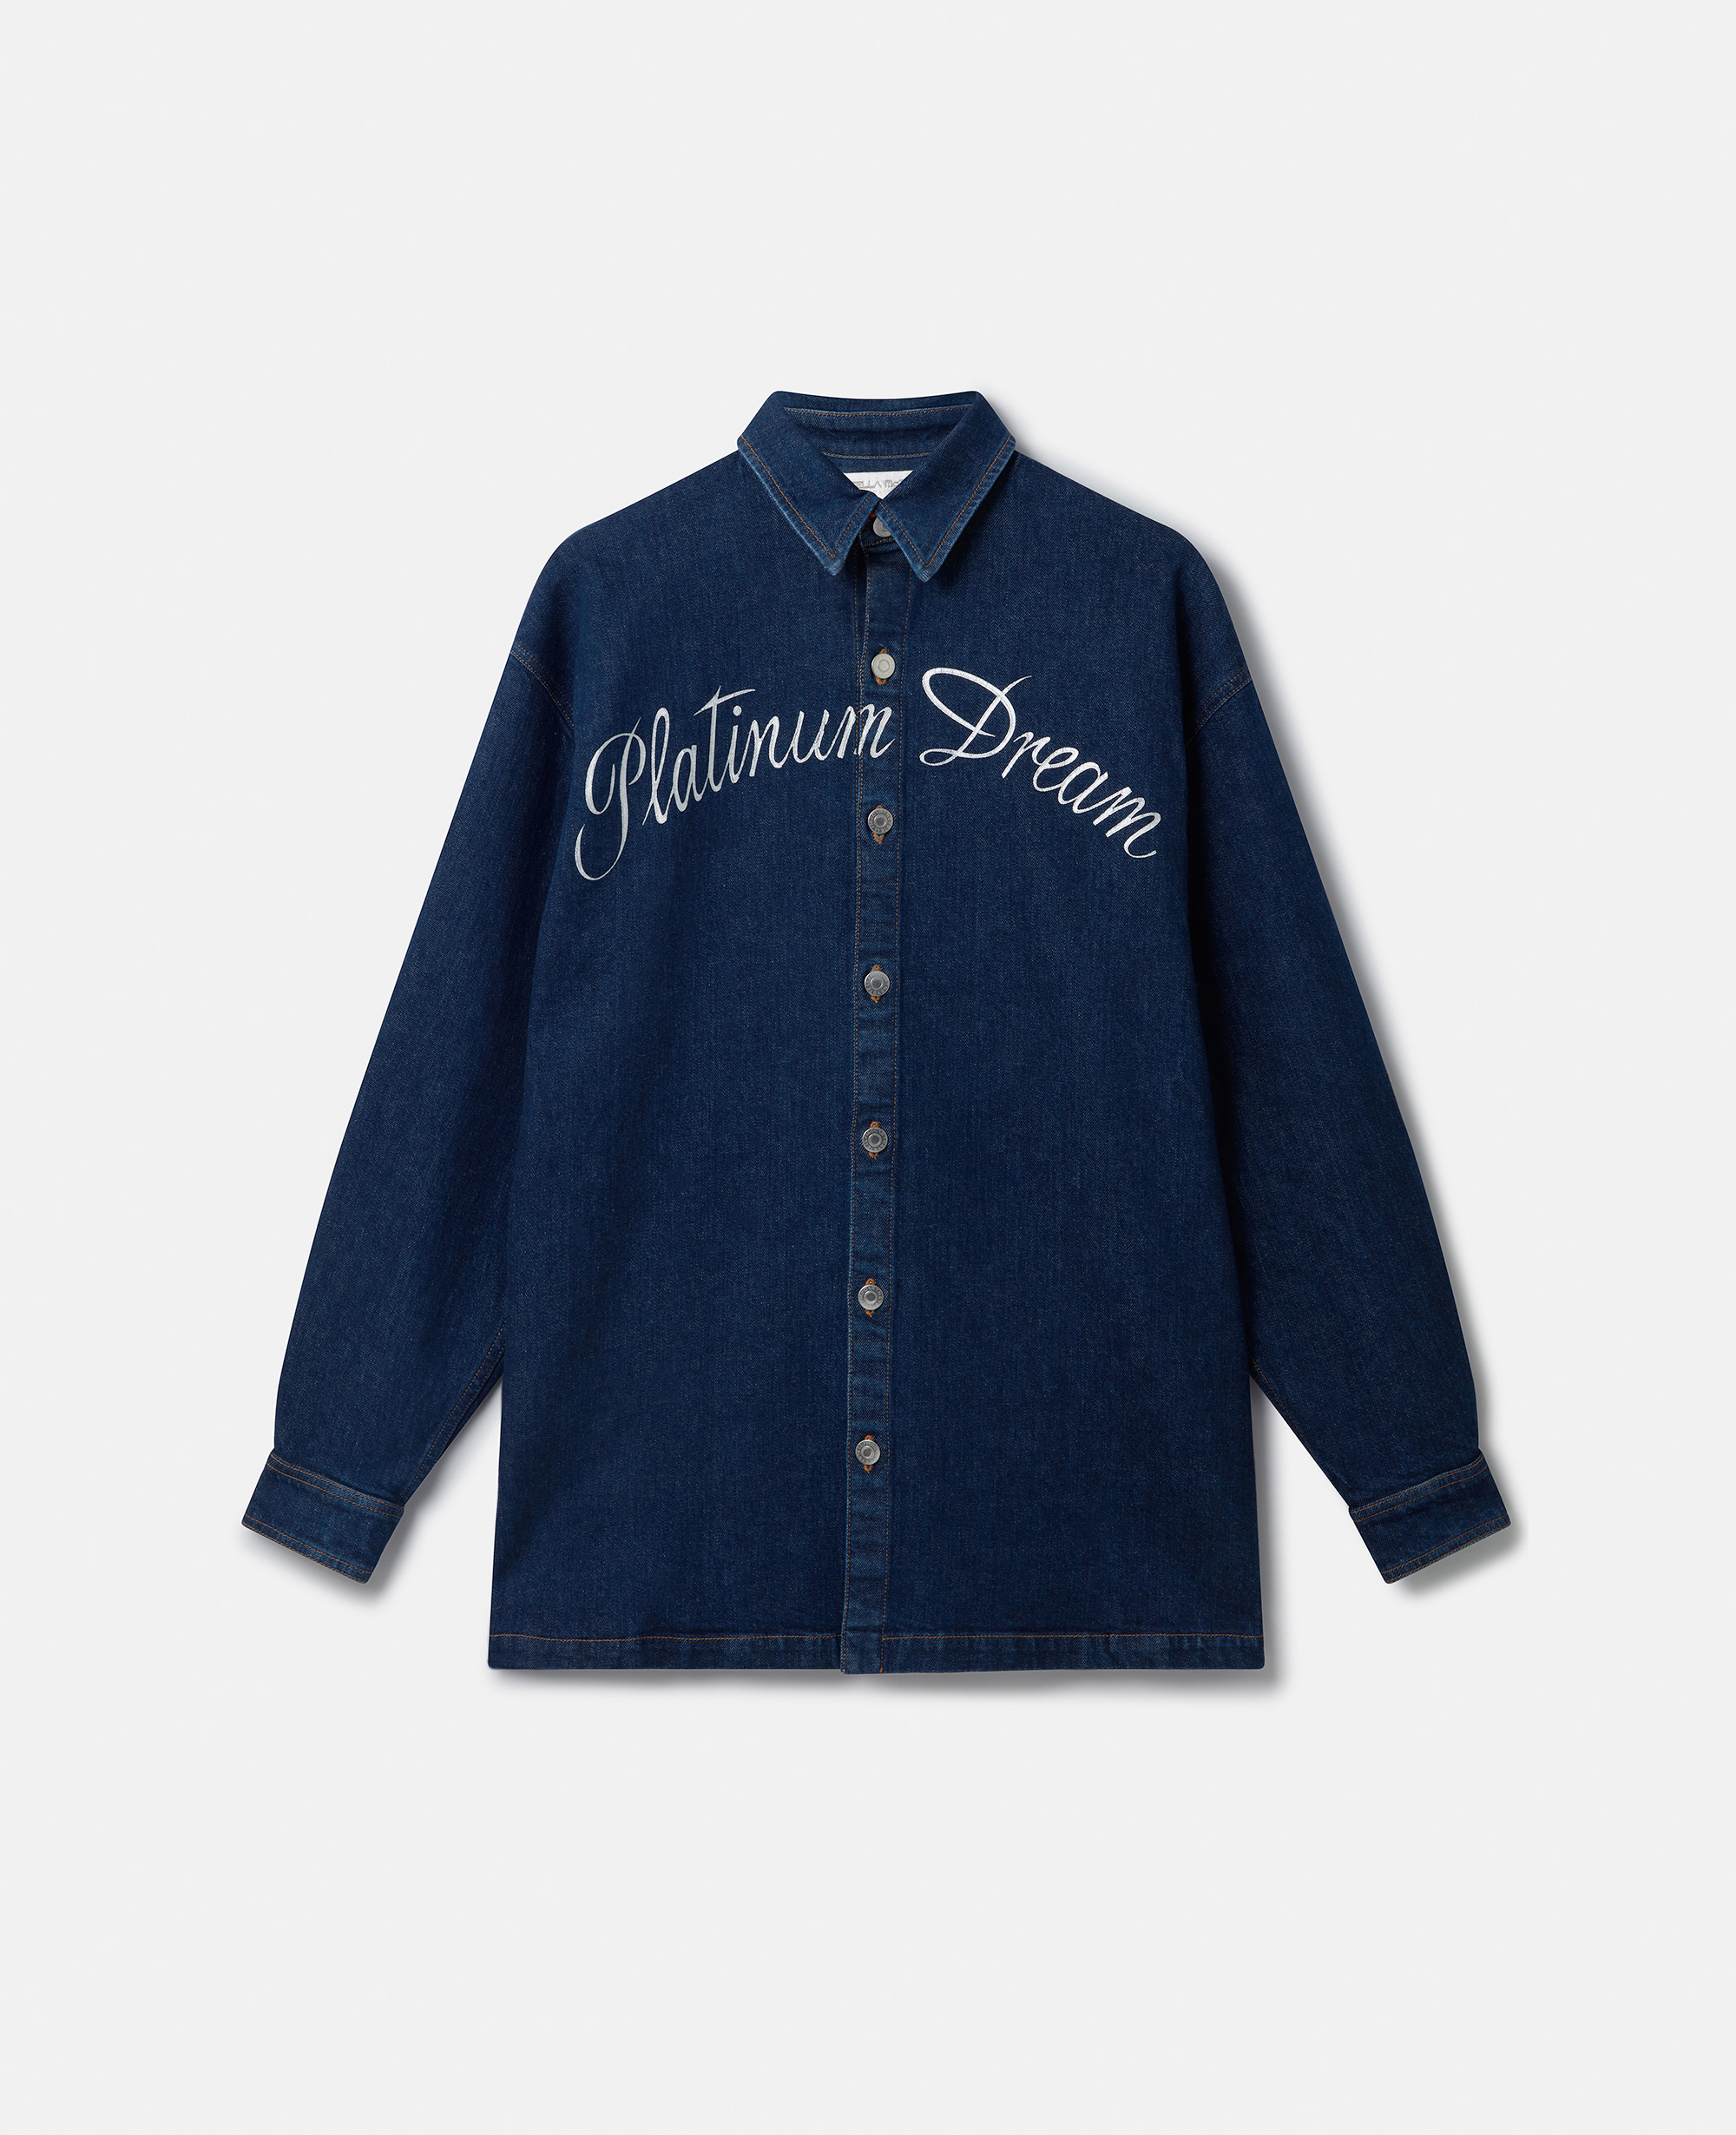 Stella Mccartney Platinum Dream Embroidered Oversized Denim Shirt In Blue